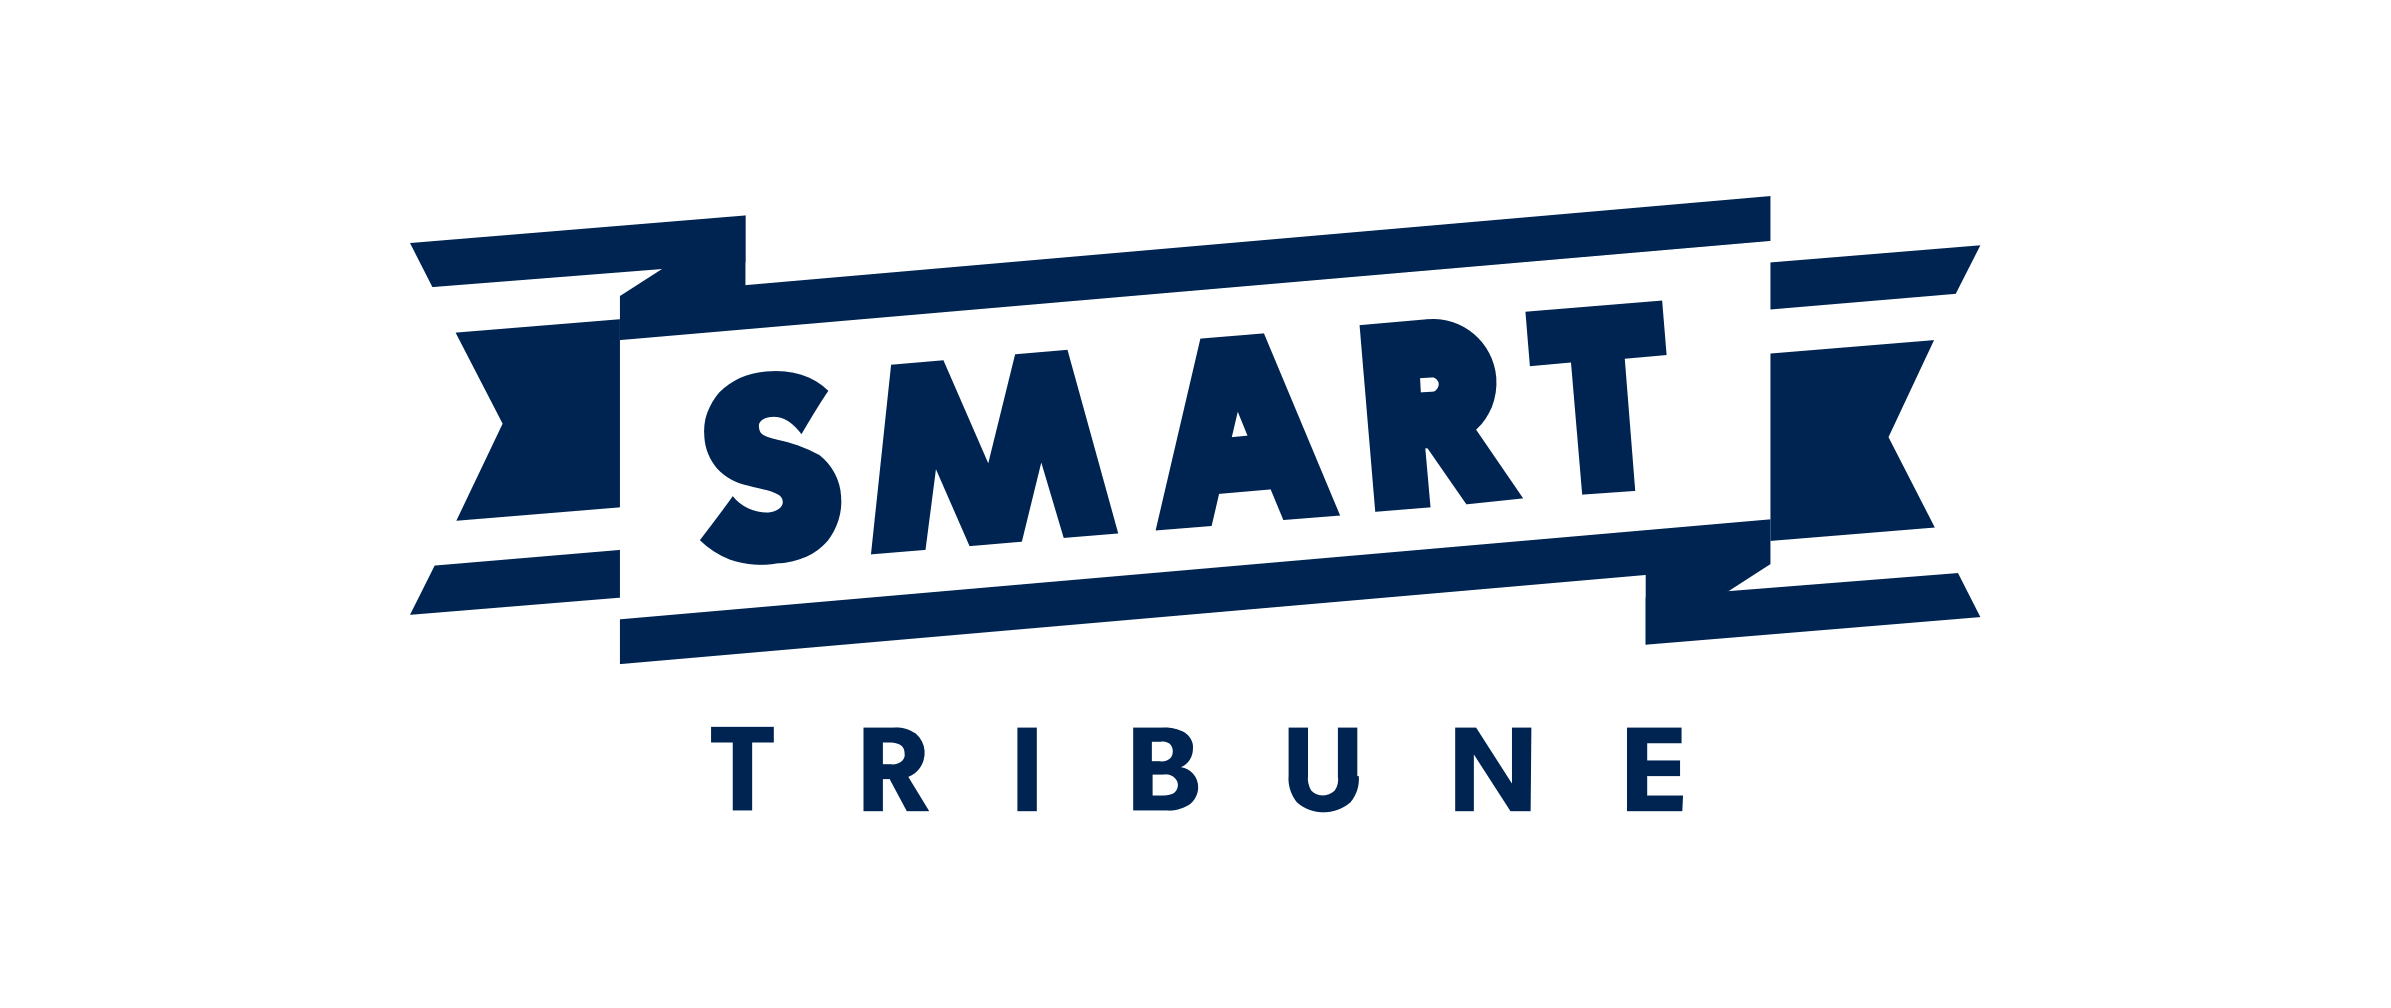 Review Smart Tribune: Leading Self-Service and Customer Autonomy Solution - Appvizer